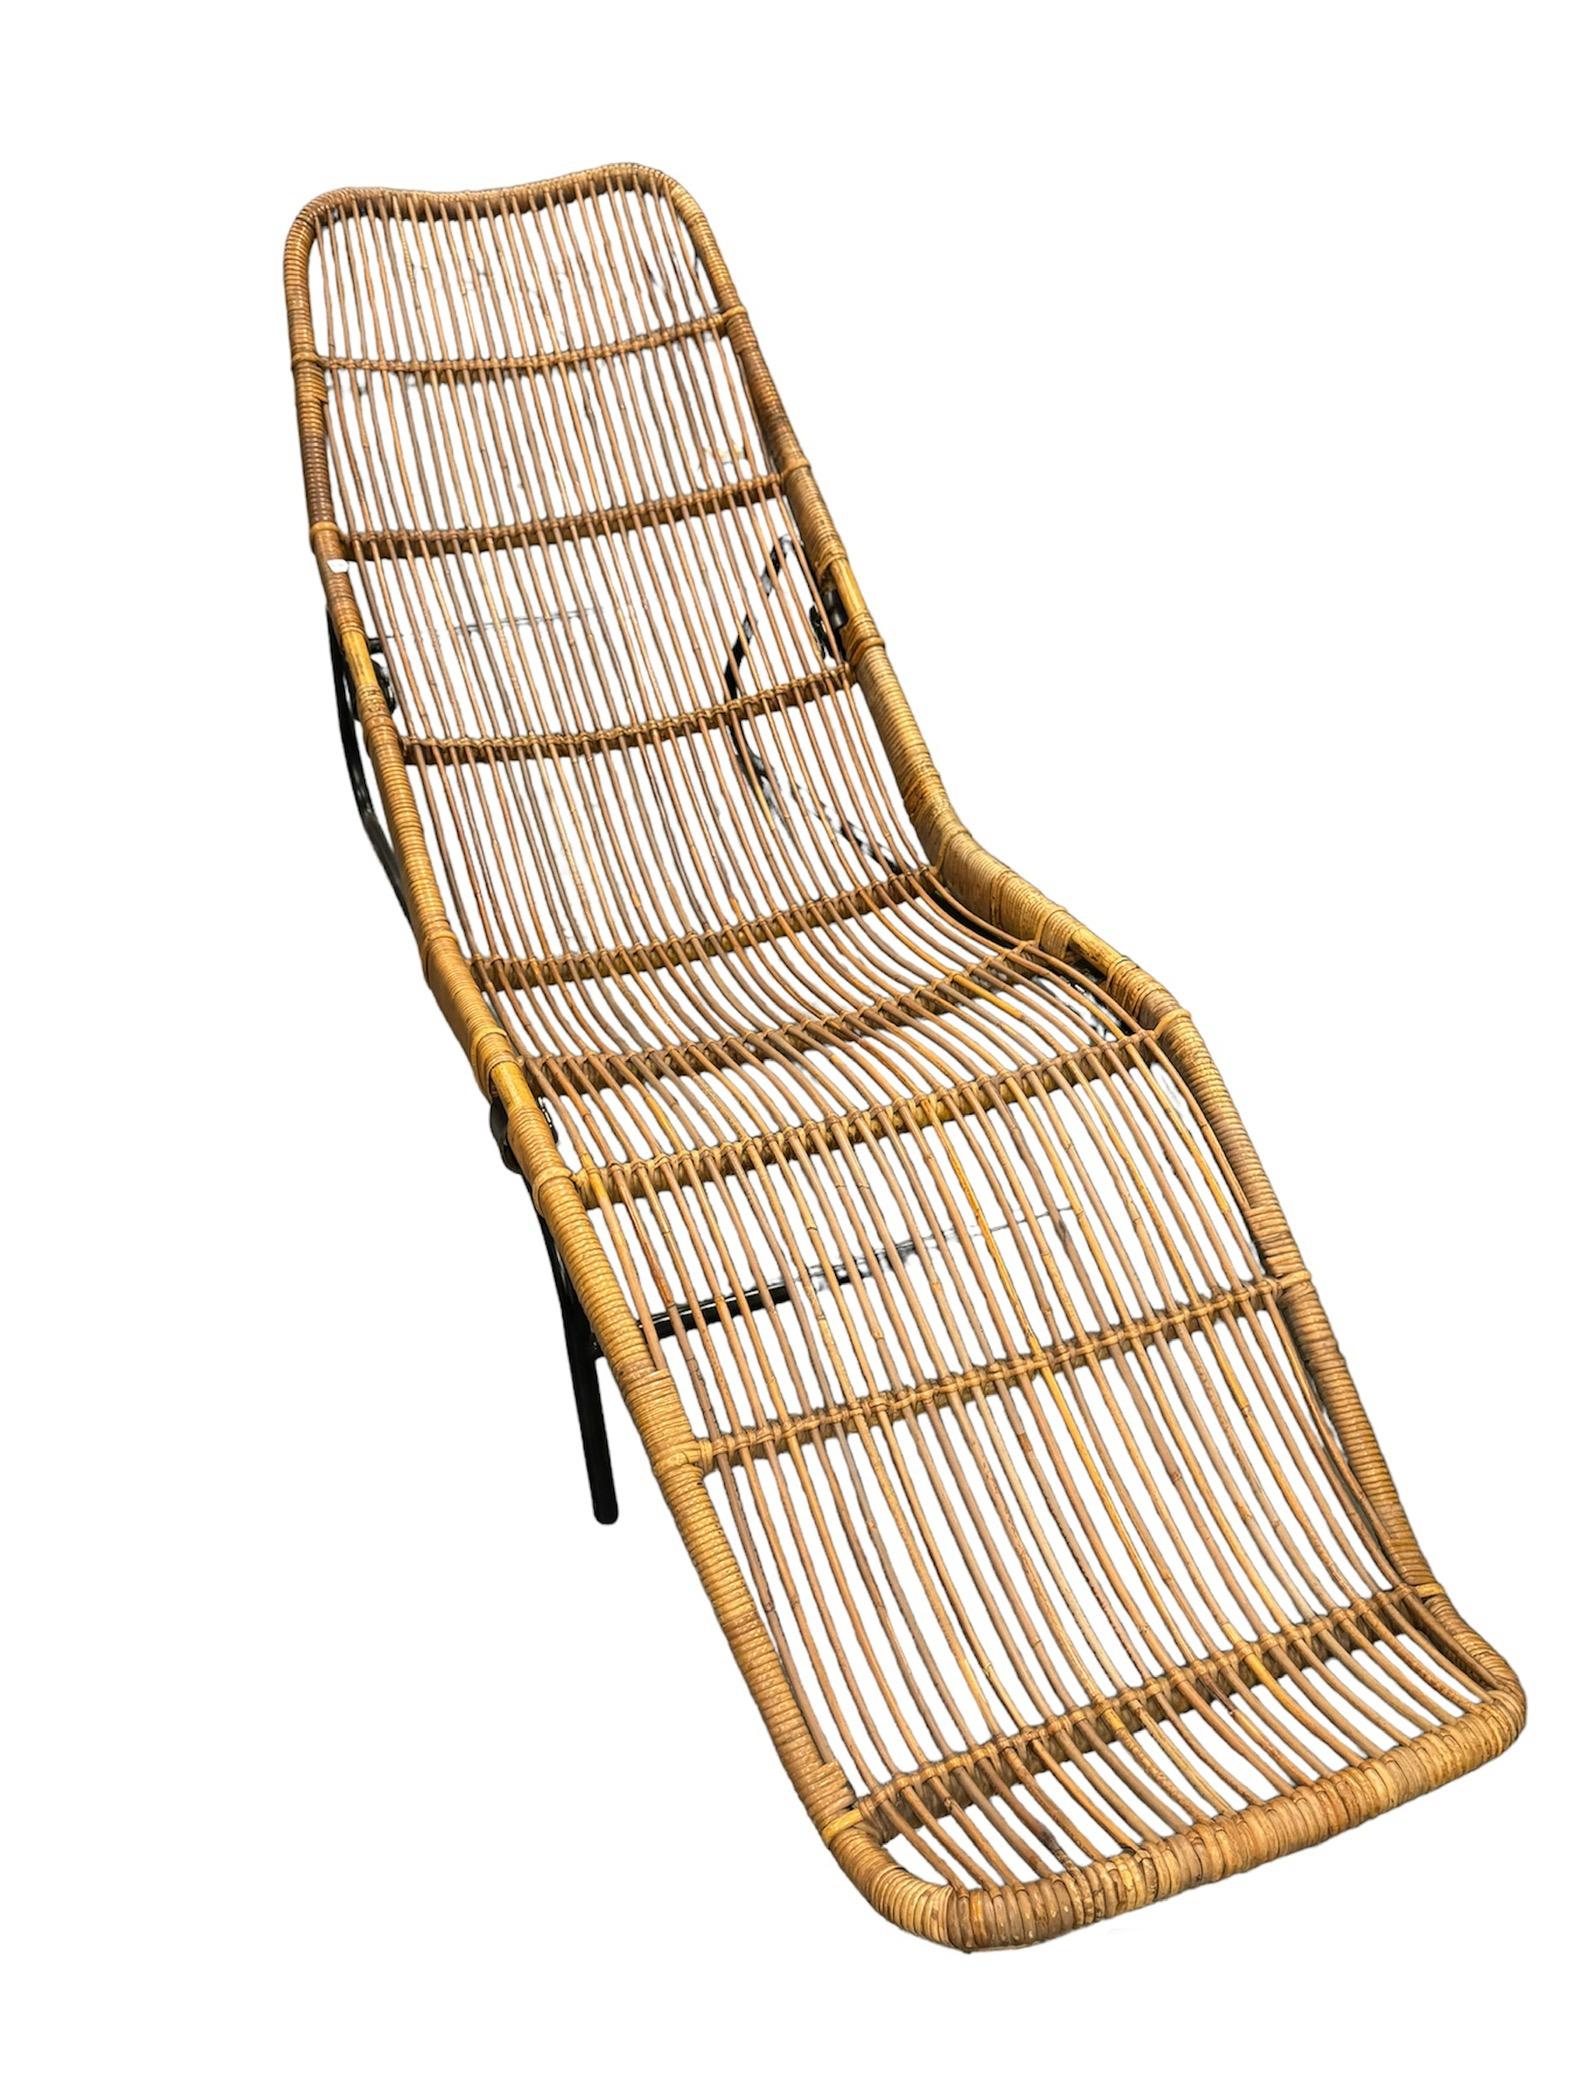 Wicker and metal  Lounge Chair by Dirk Van Sliedrecht Mid modern century  For Sale 3